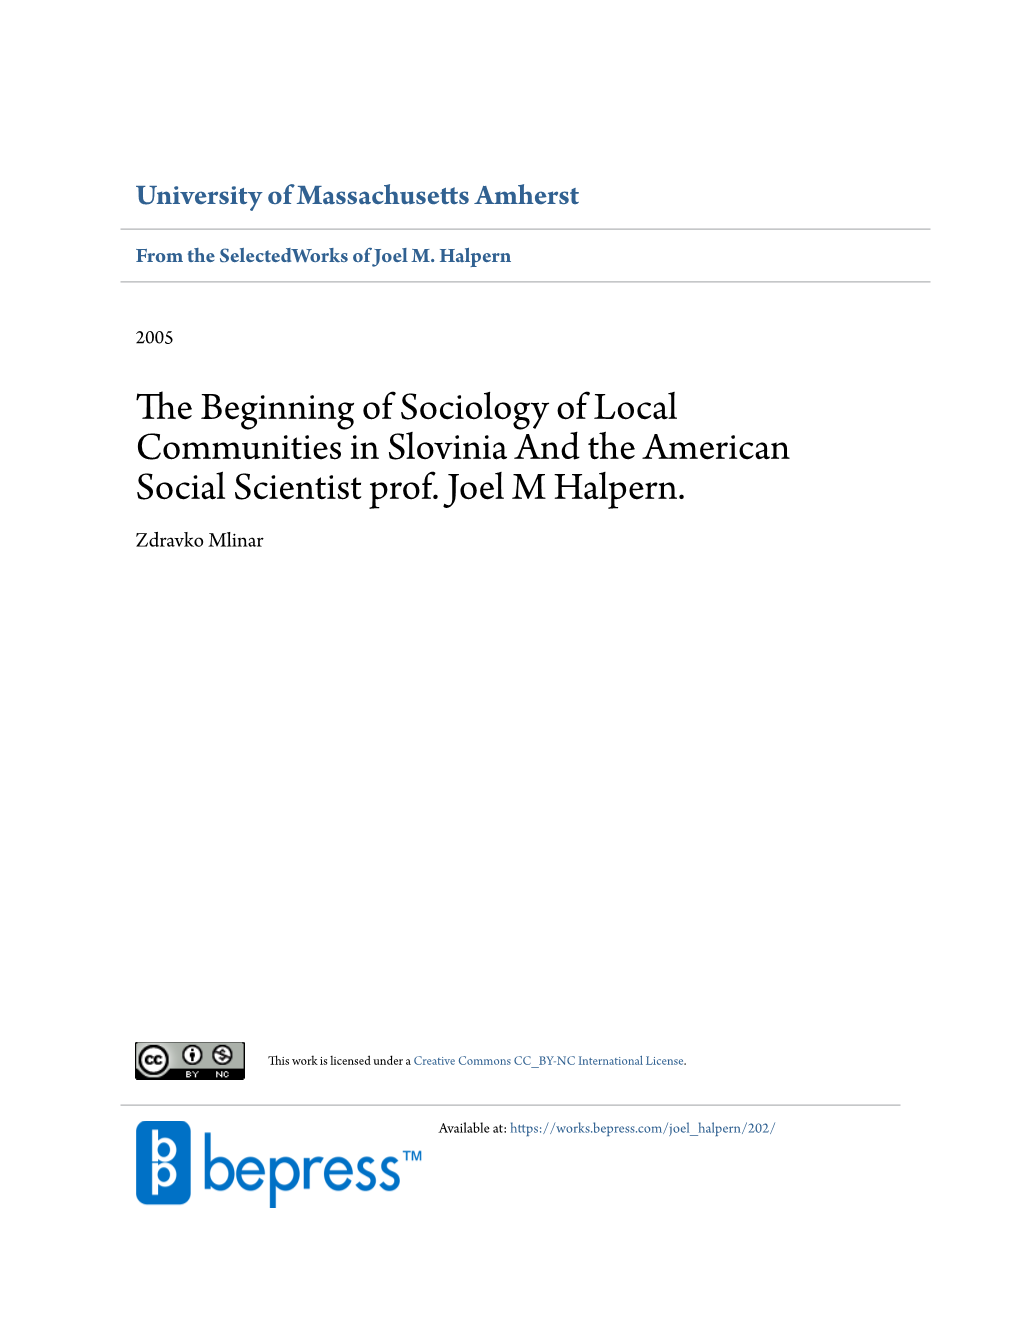 The Beginning of Sociology of Local Communities in Slovinia and the American Social Scientist Prof. Joel M Halpern. Zdravko Mlinar